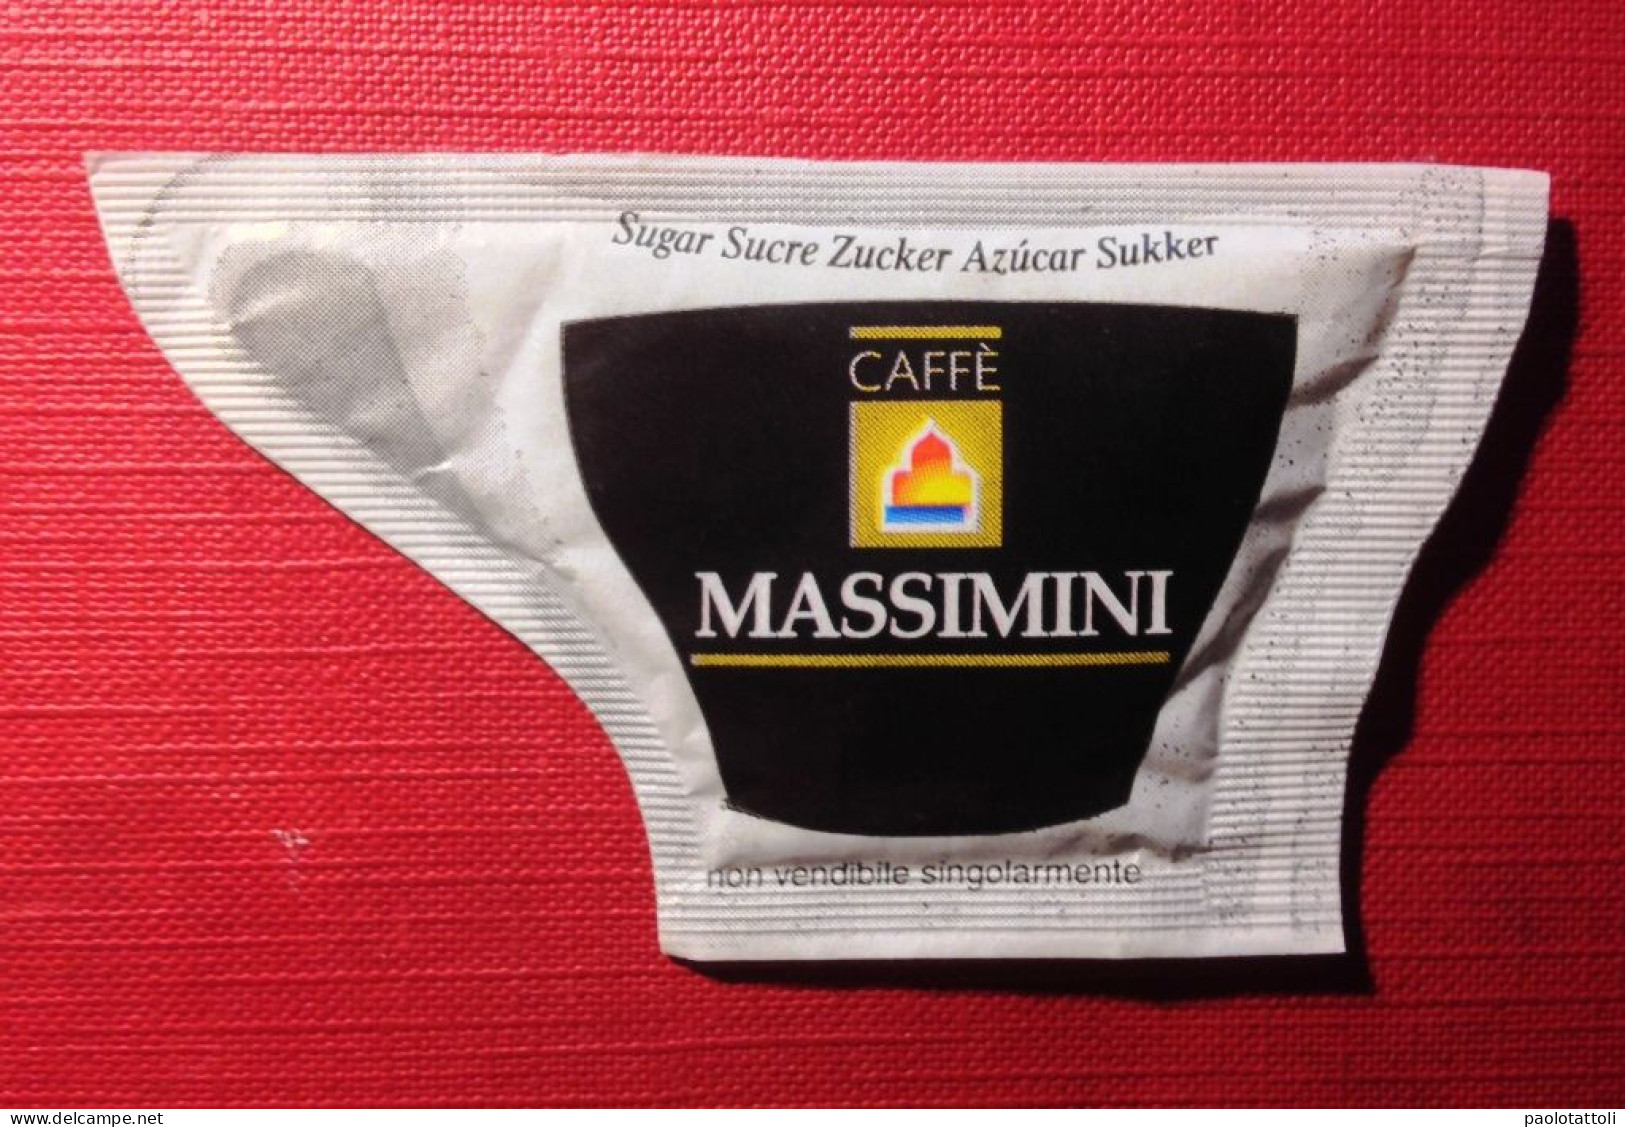 Sugar Bag Full- Caffè Massimini. - Sugars